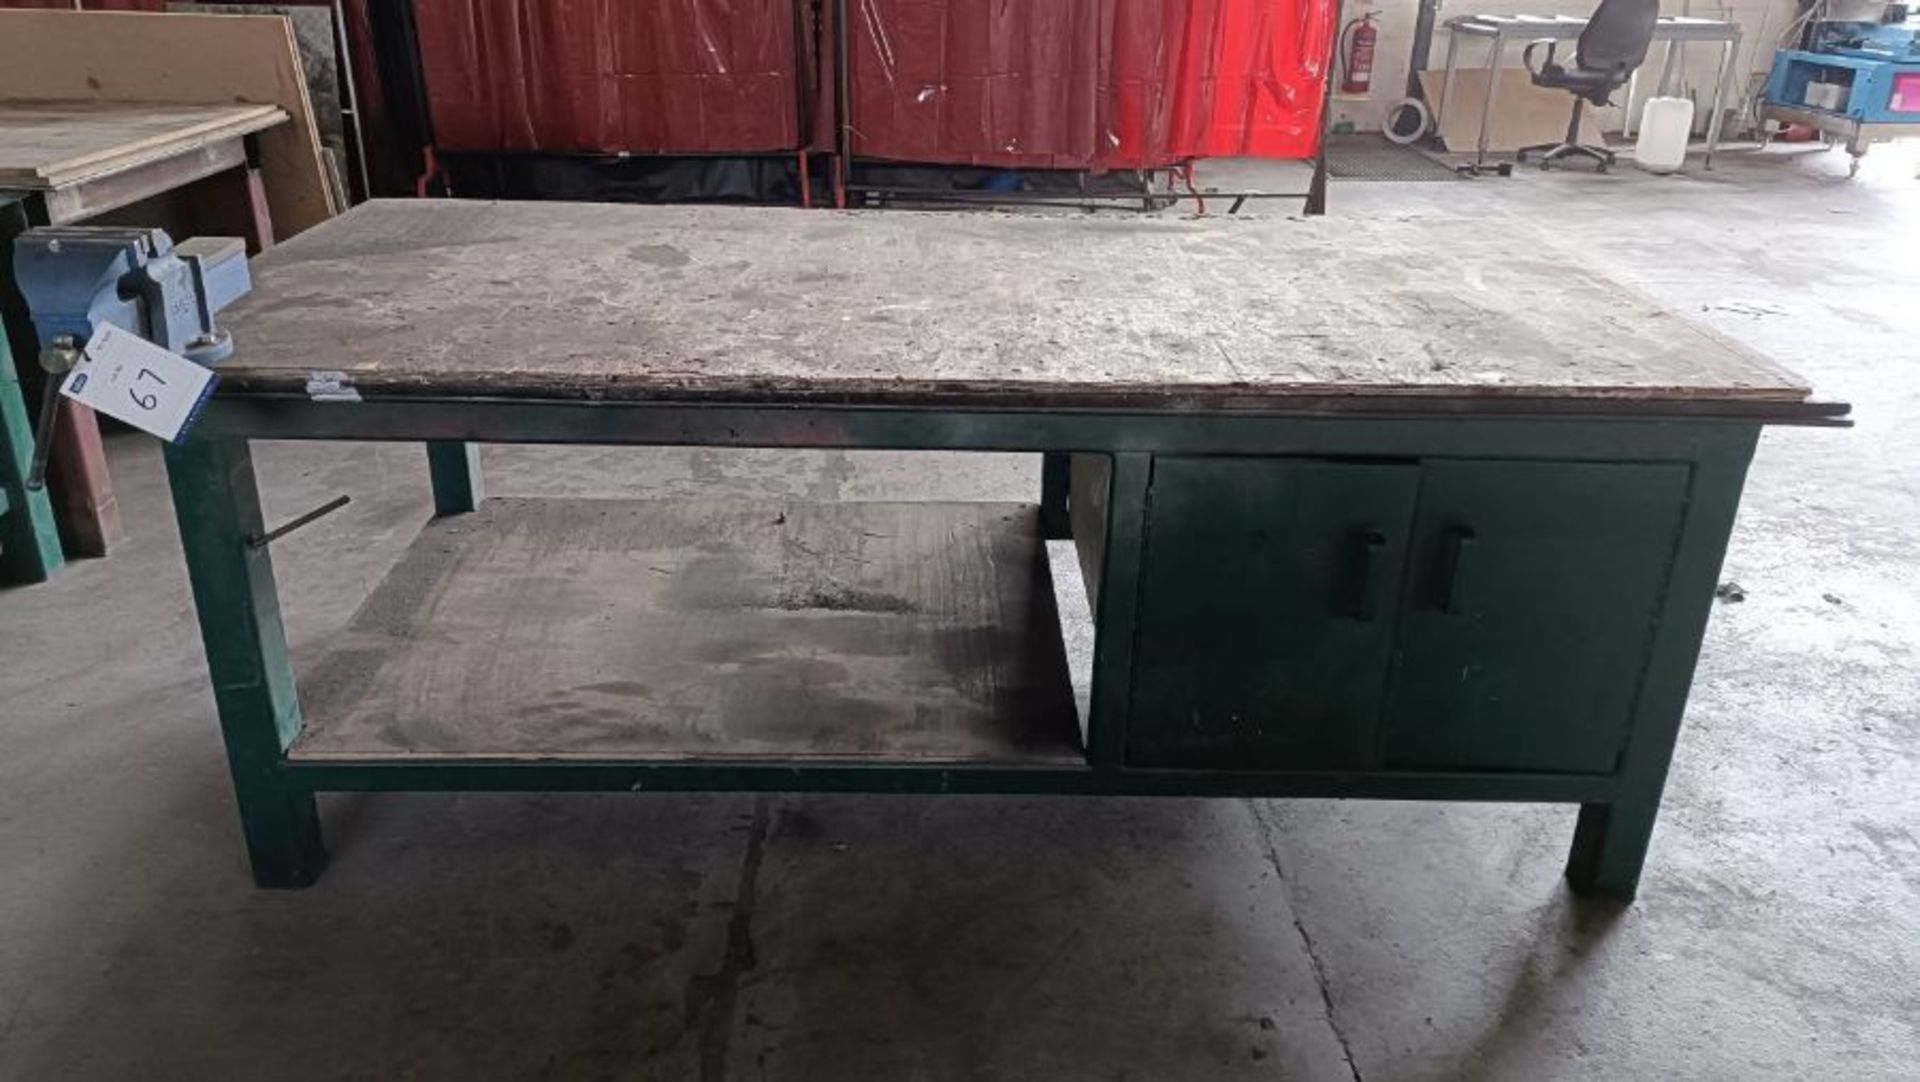 Steel work bench, vice